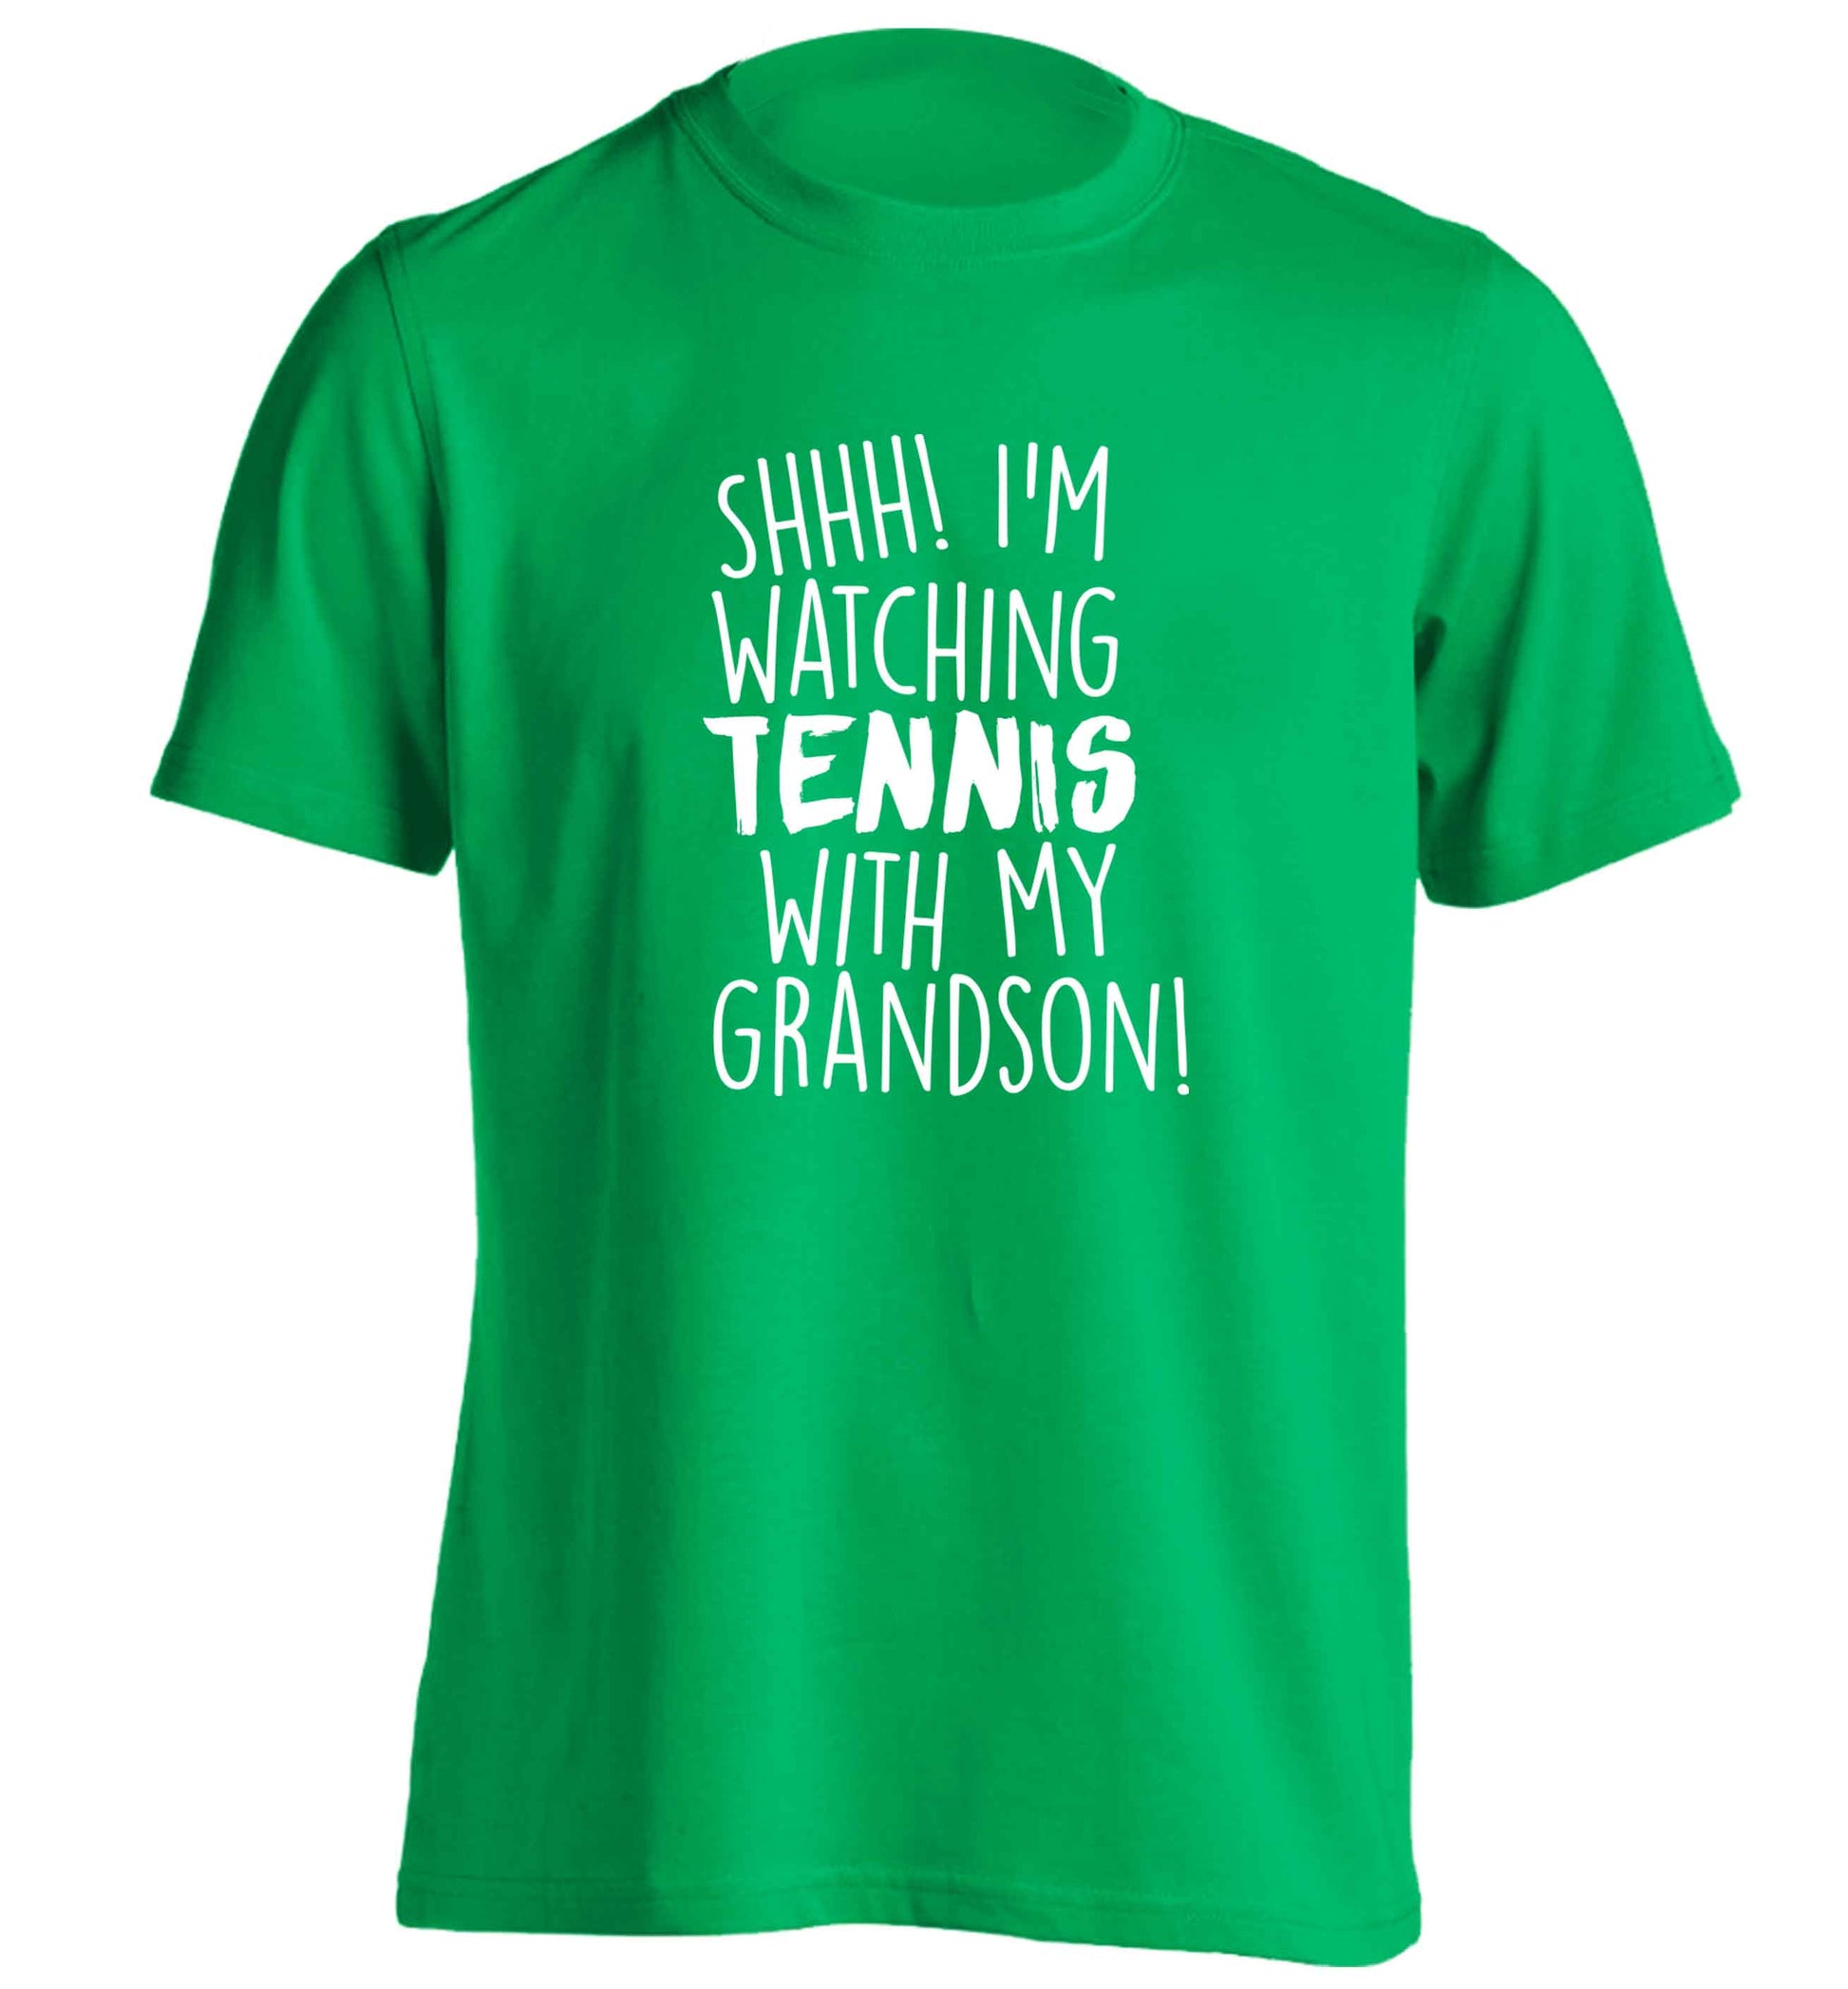 Shh! I'm watching tennis with my grandson! adults unisex green Tshirt 2XL